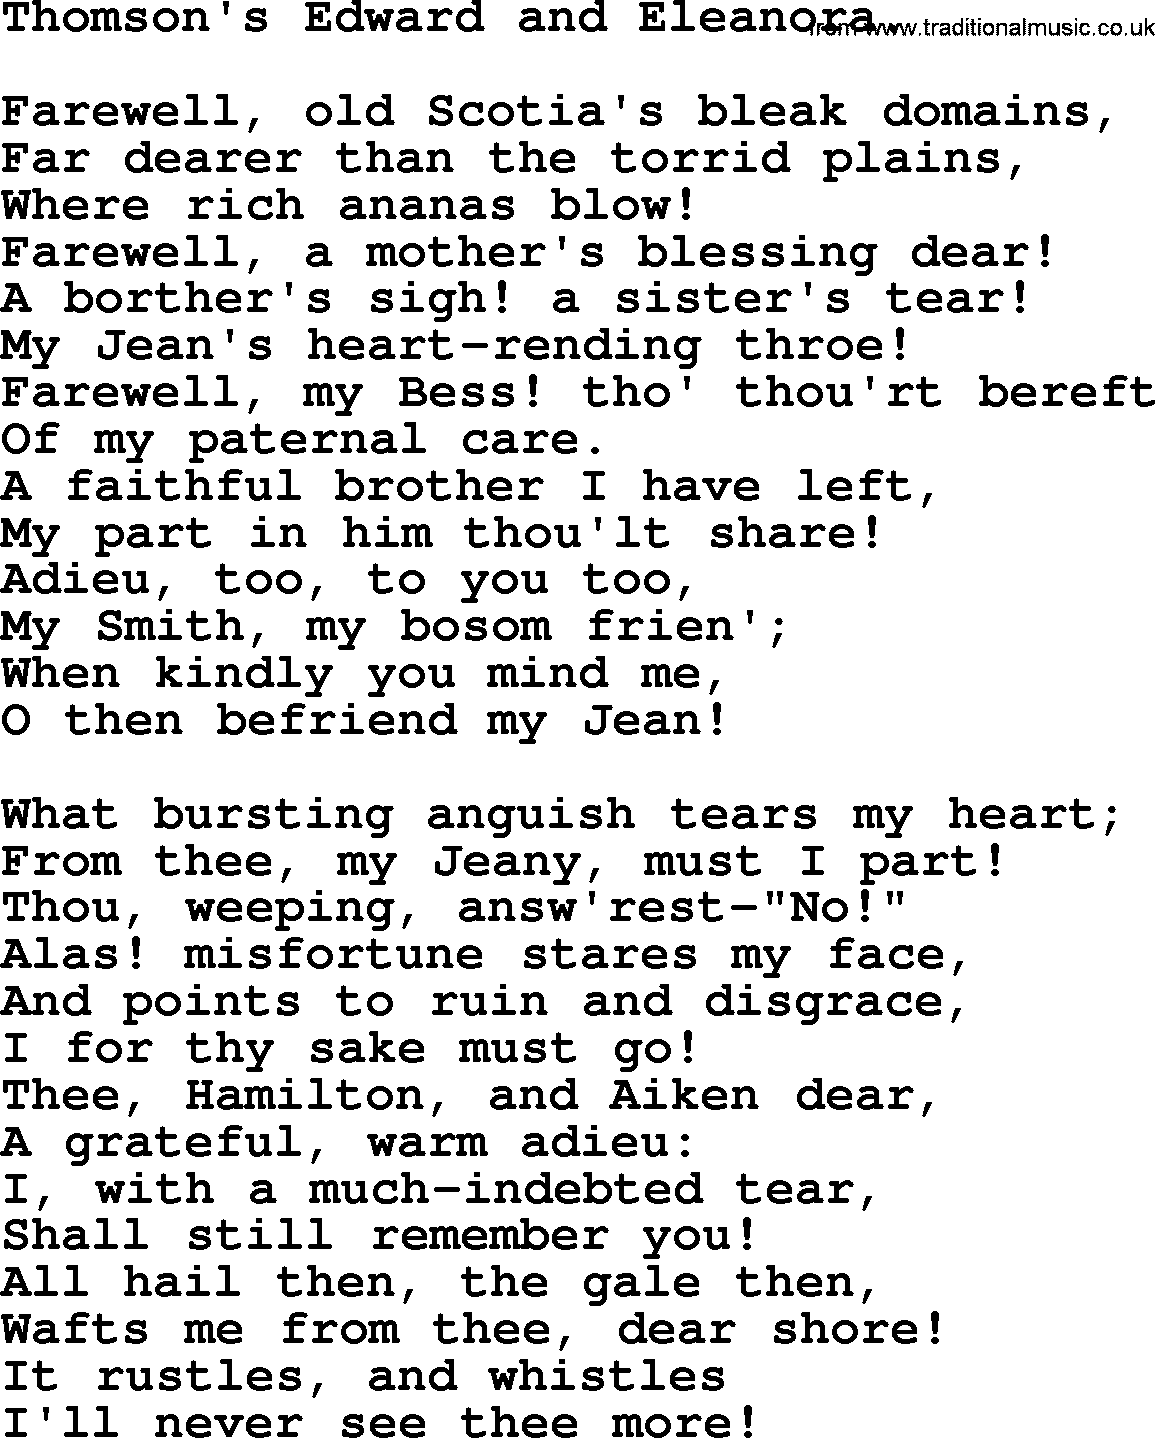 Robert Burns Songs & Lyrics: Thomson's Edward And Eleanora.